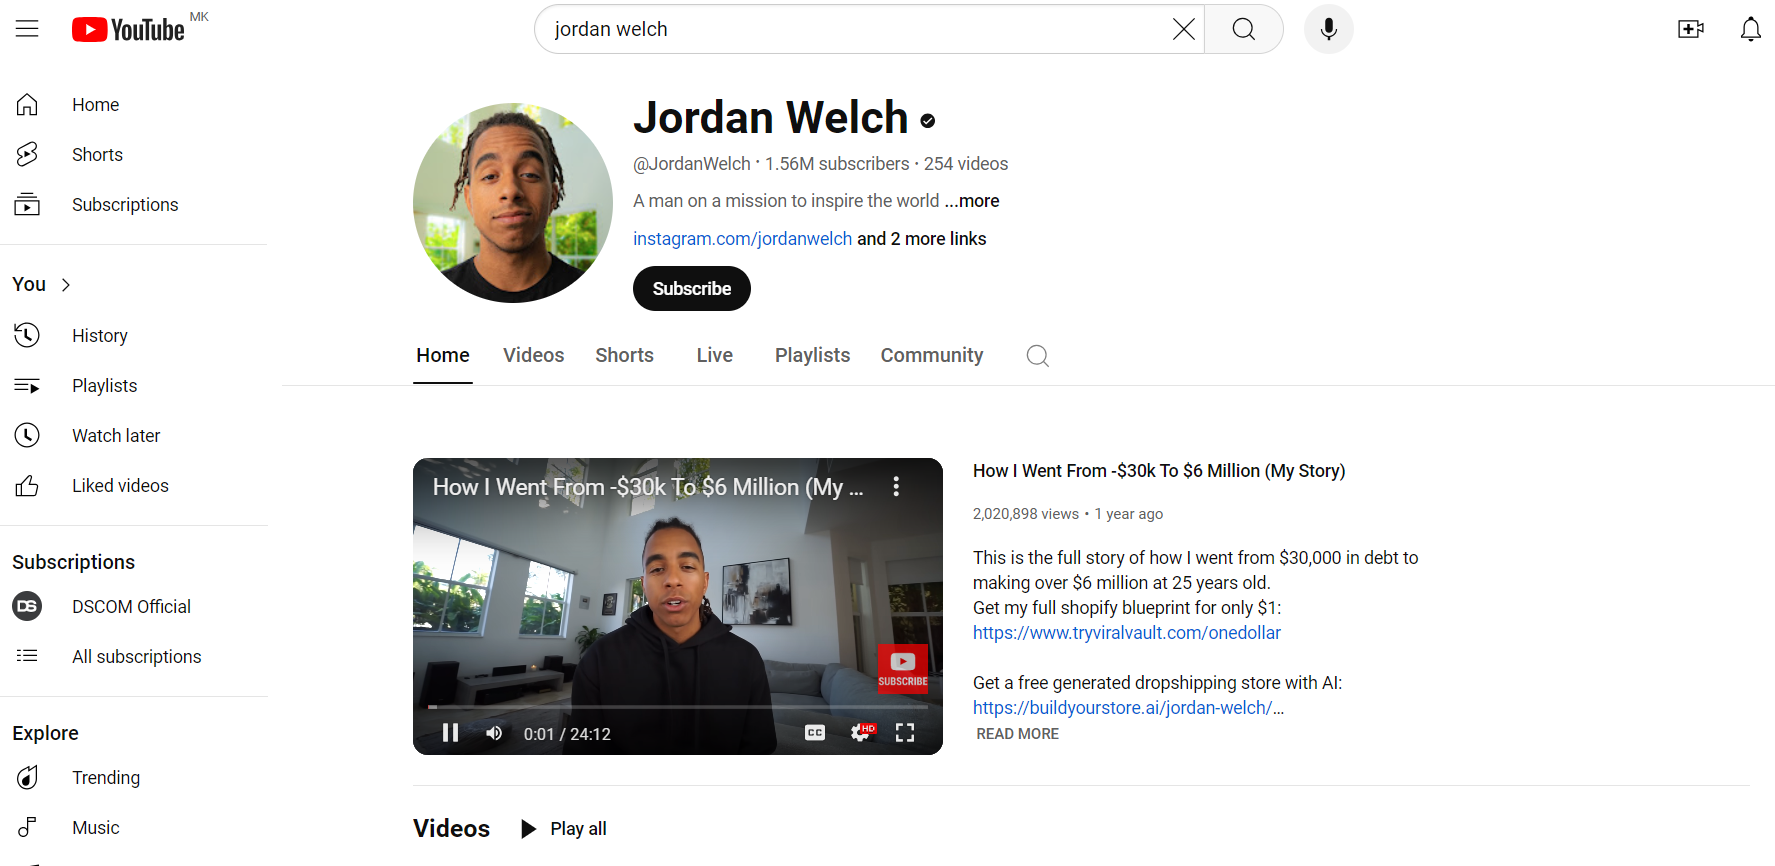 jordan welch youtube profile